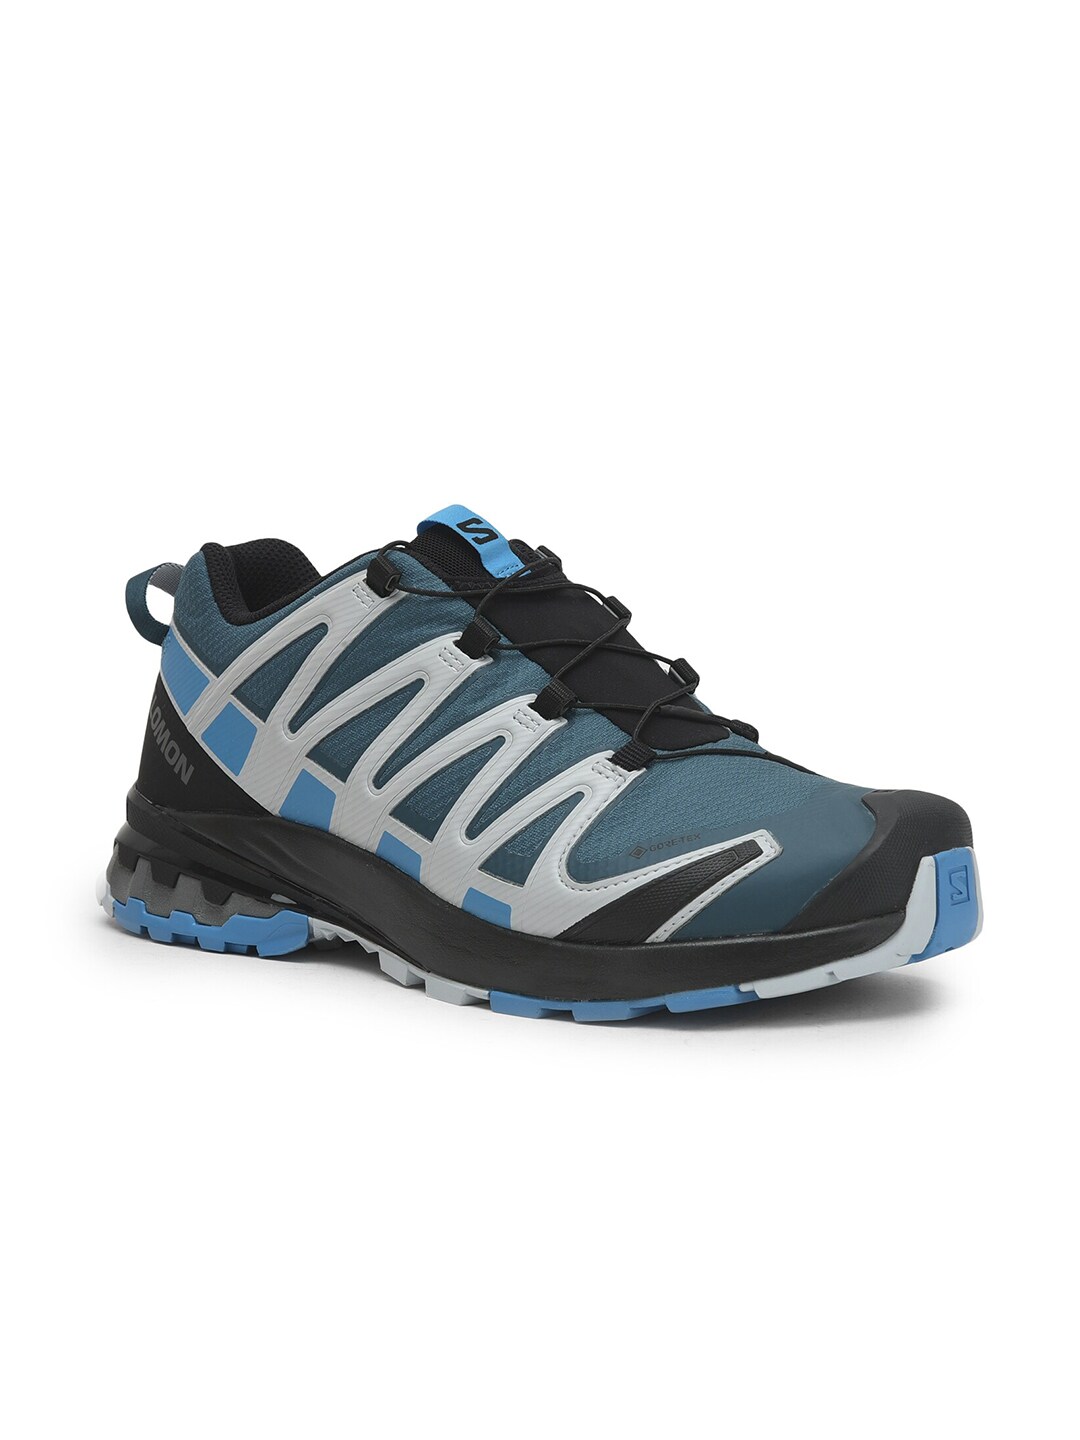 Salomon Men XA Pro 3D v8 GTX Contagrip Technology Running Shoes